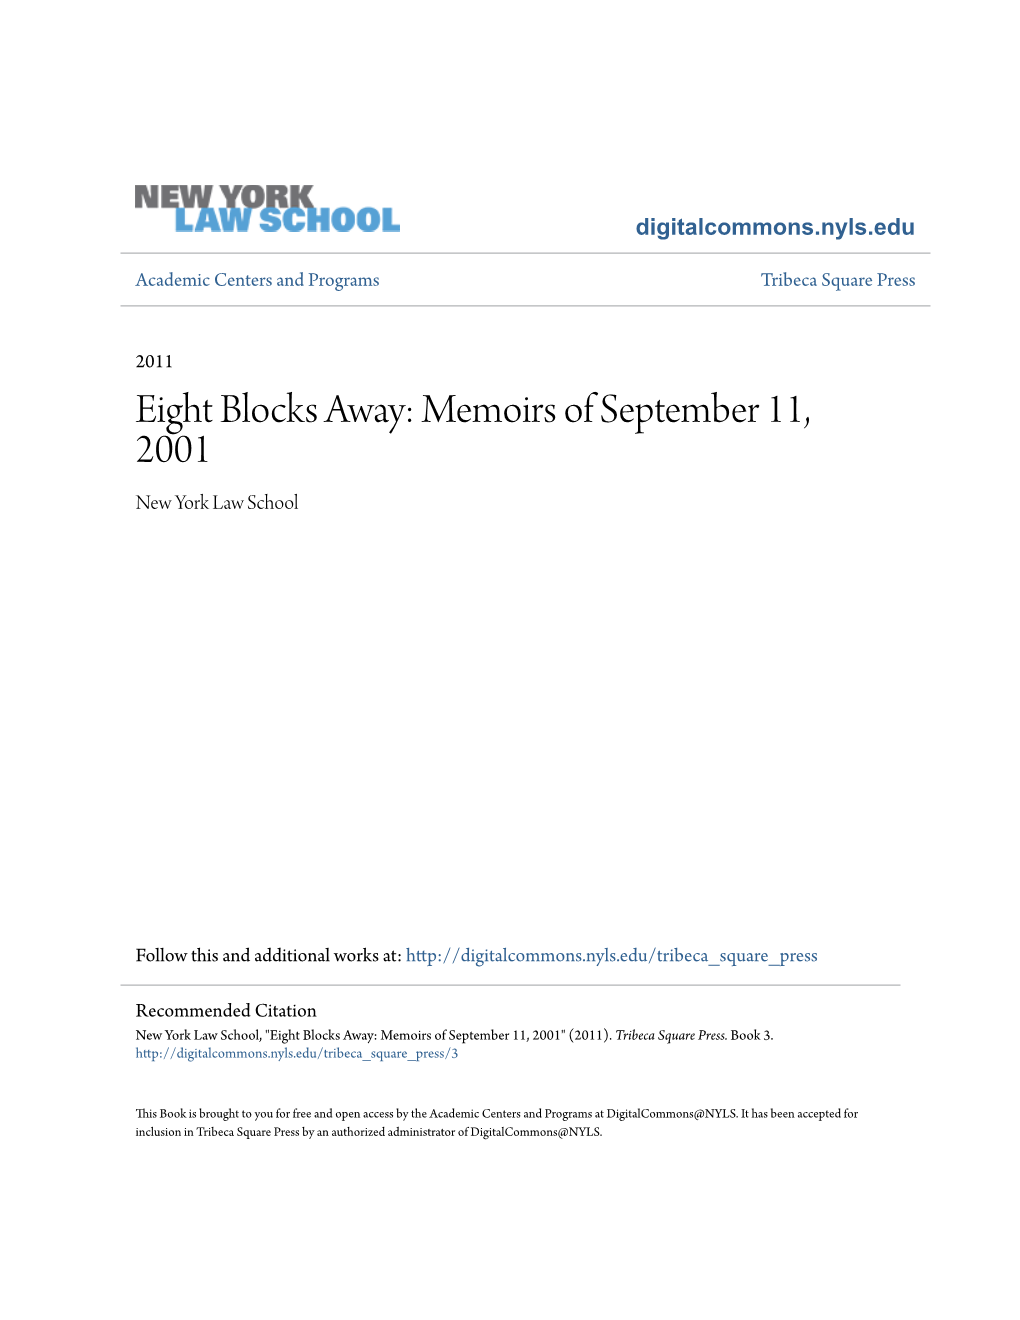 Memoirs of September 11, 2001 New York Law School